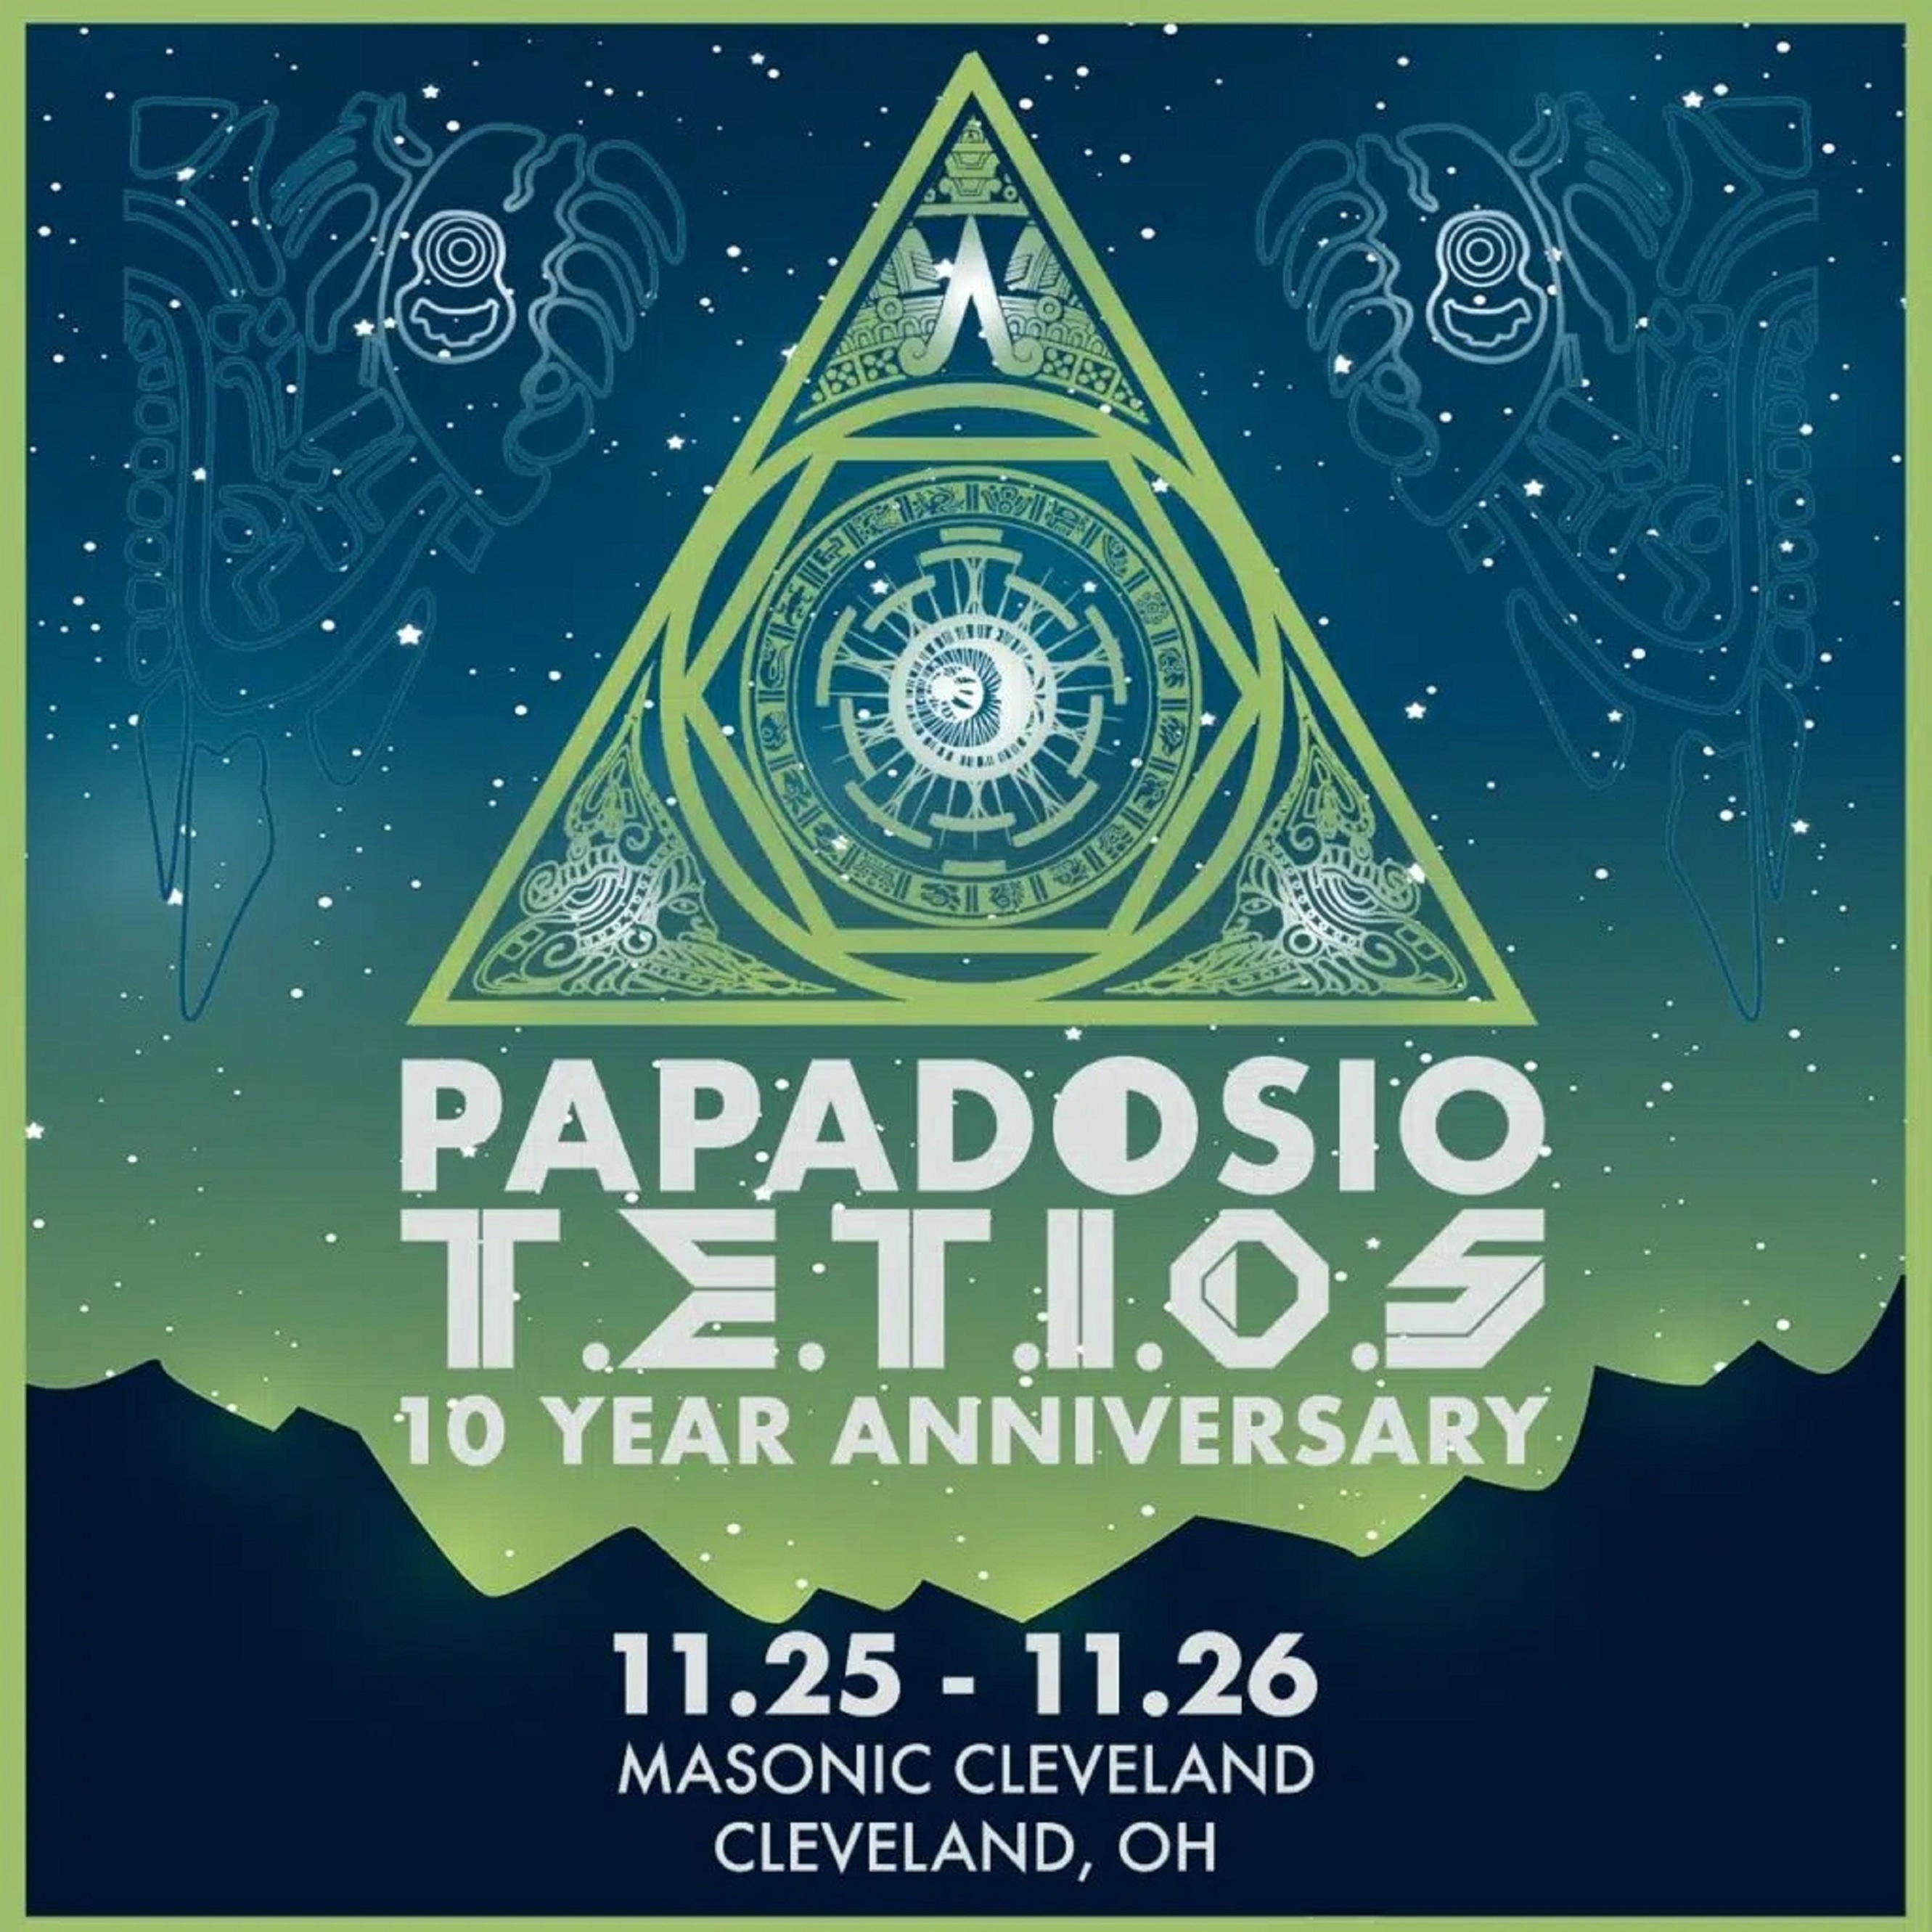 Papadosio's 10 year TETIOS anniversary moves to Cleveland